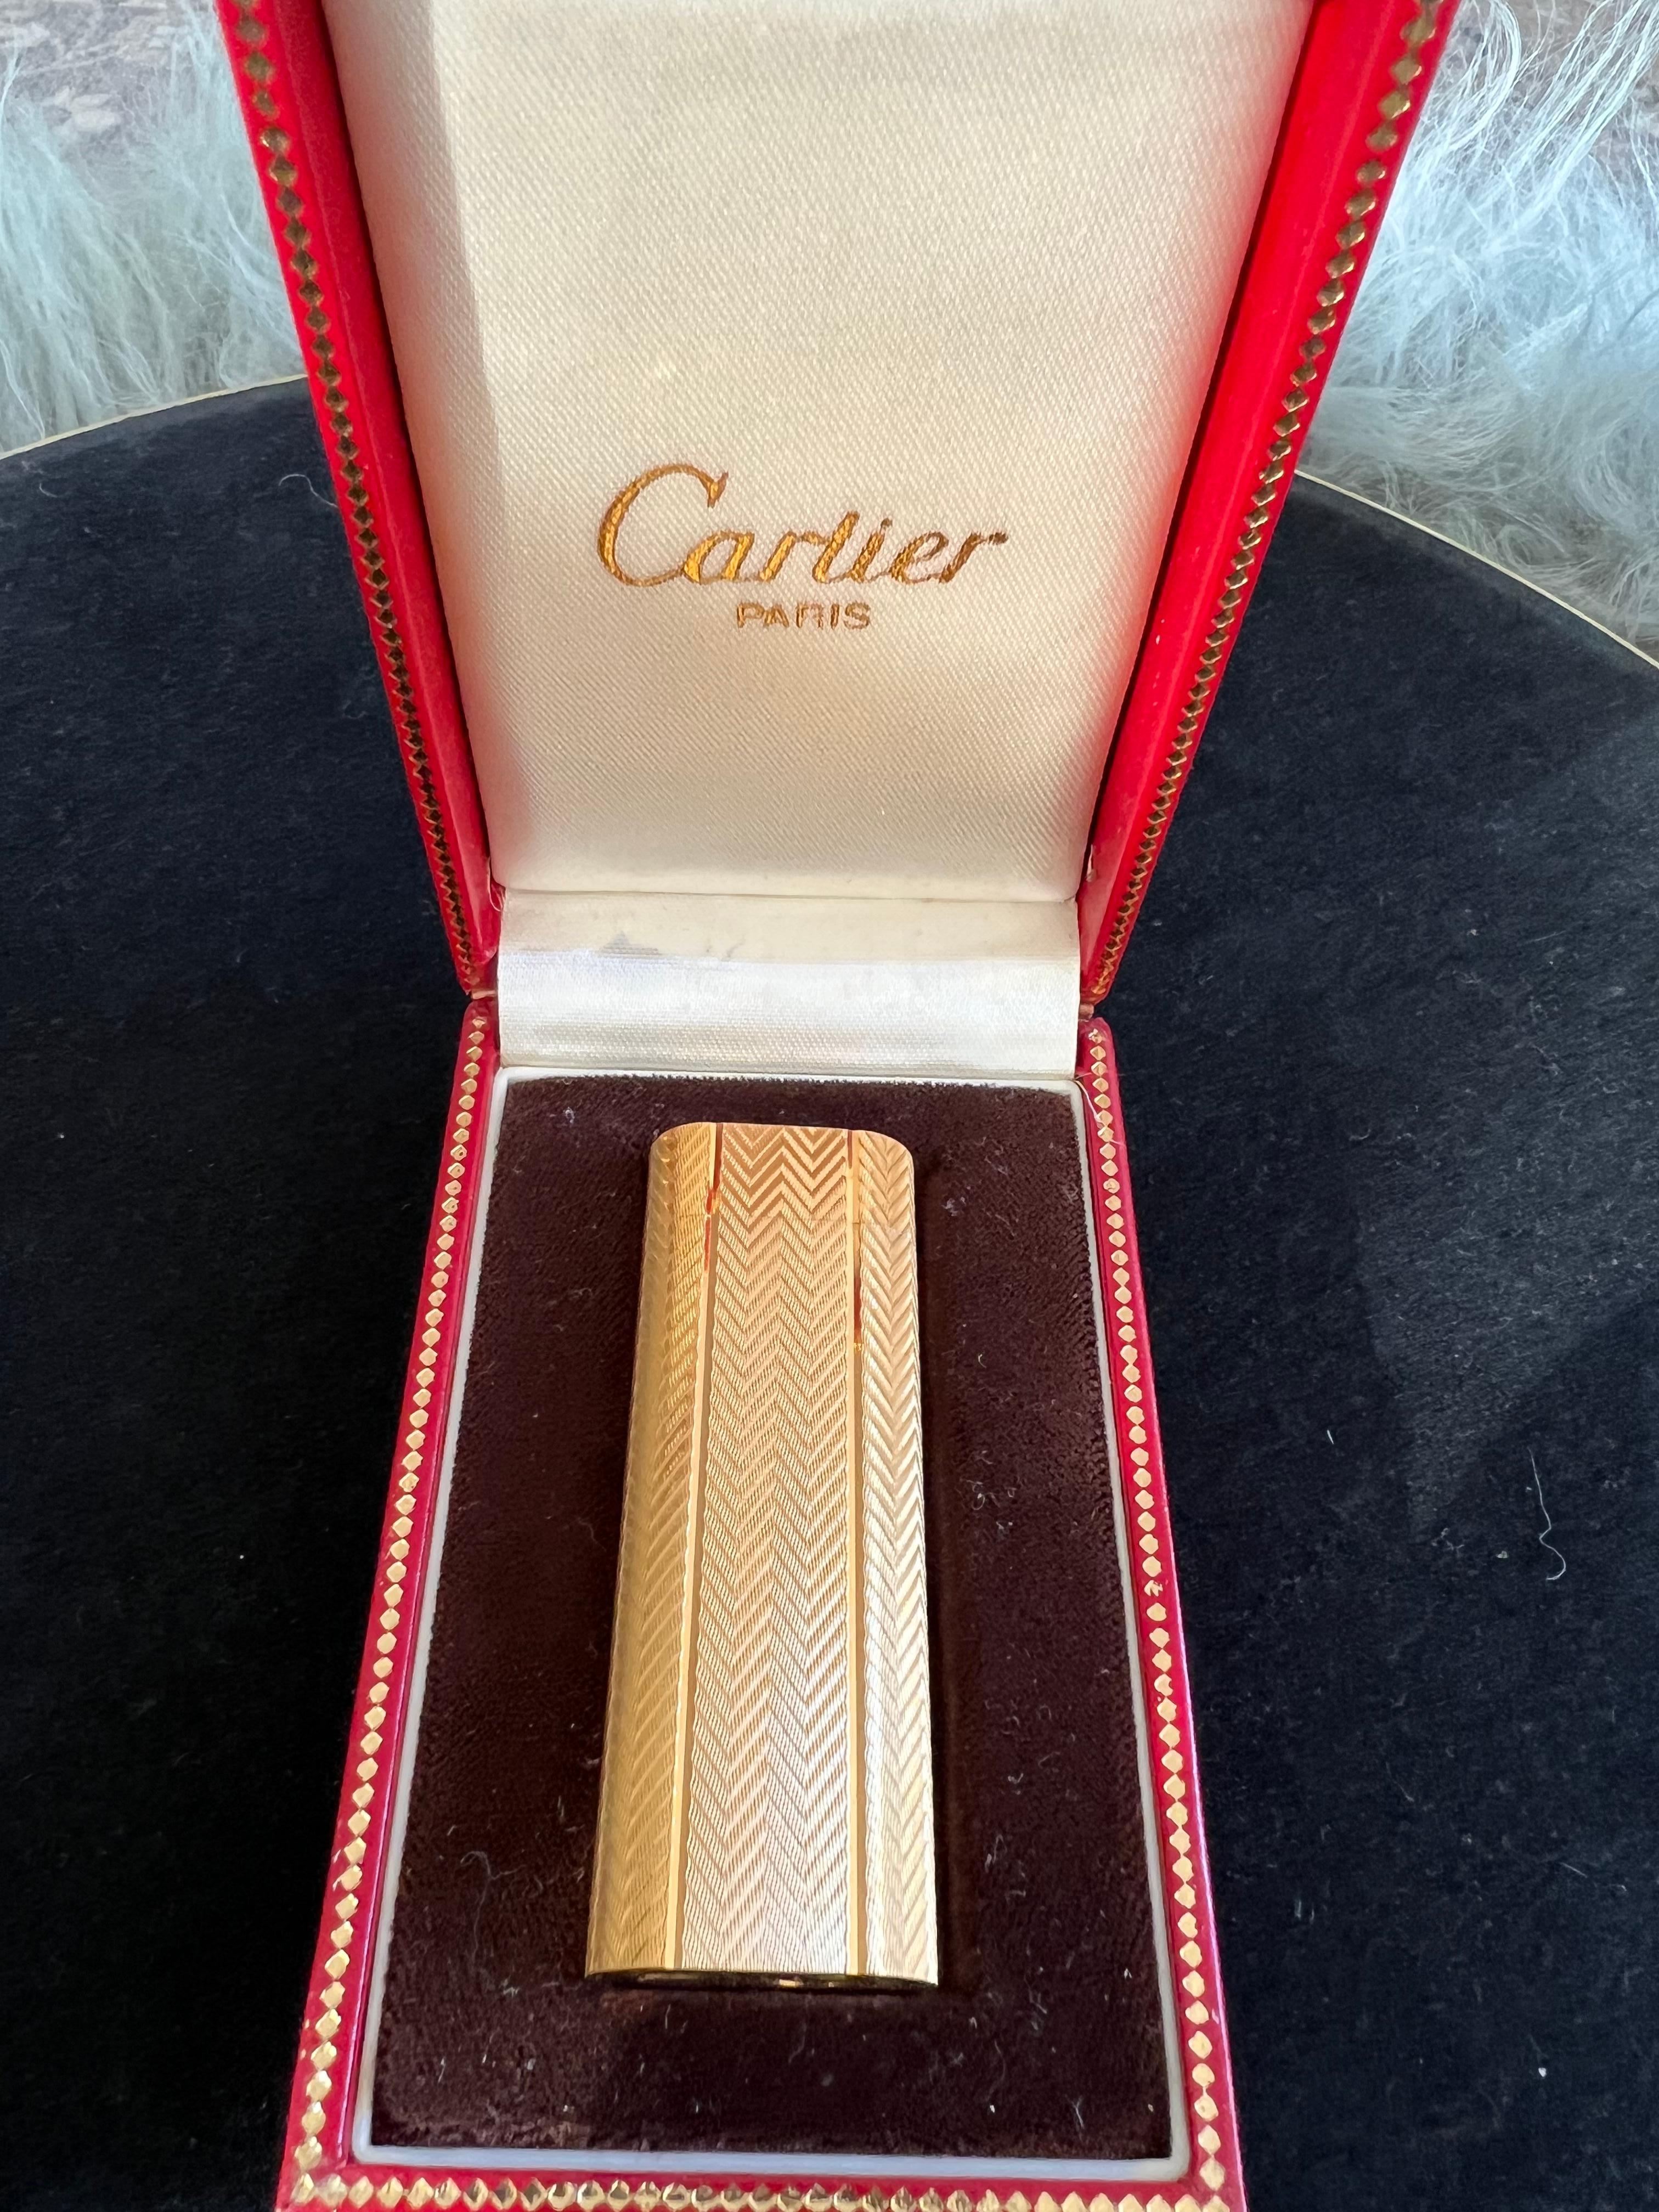 Les Must de Cartier Paris 18k Gold Plated Lighter 8